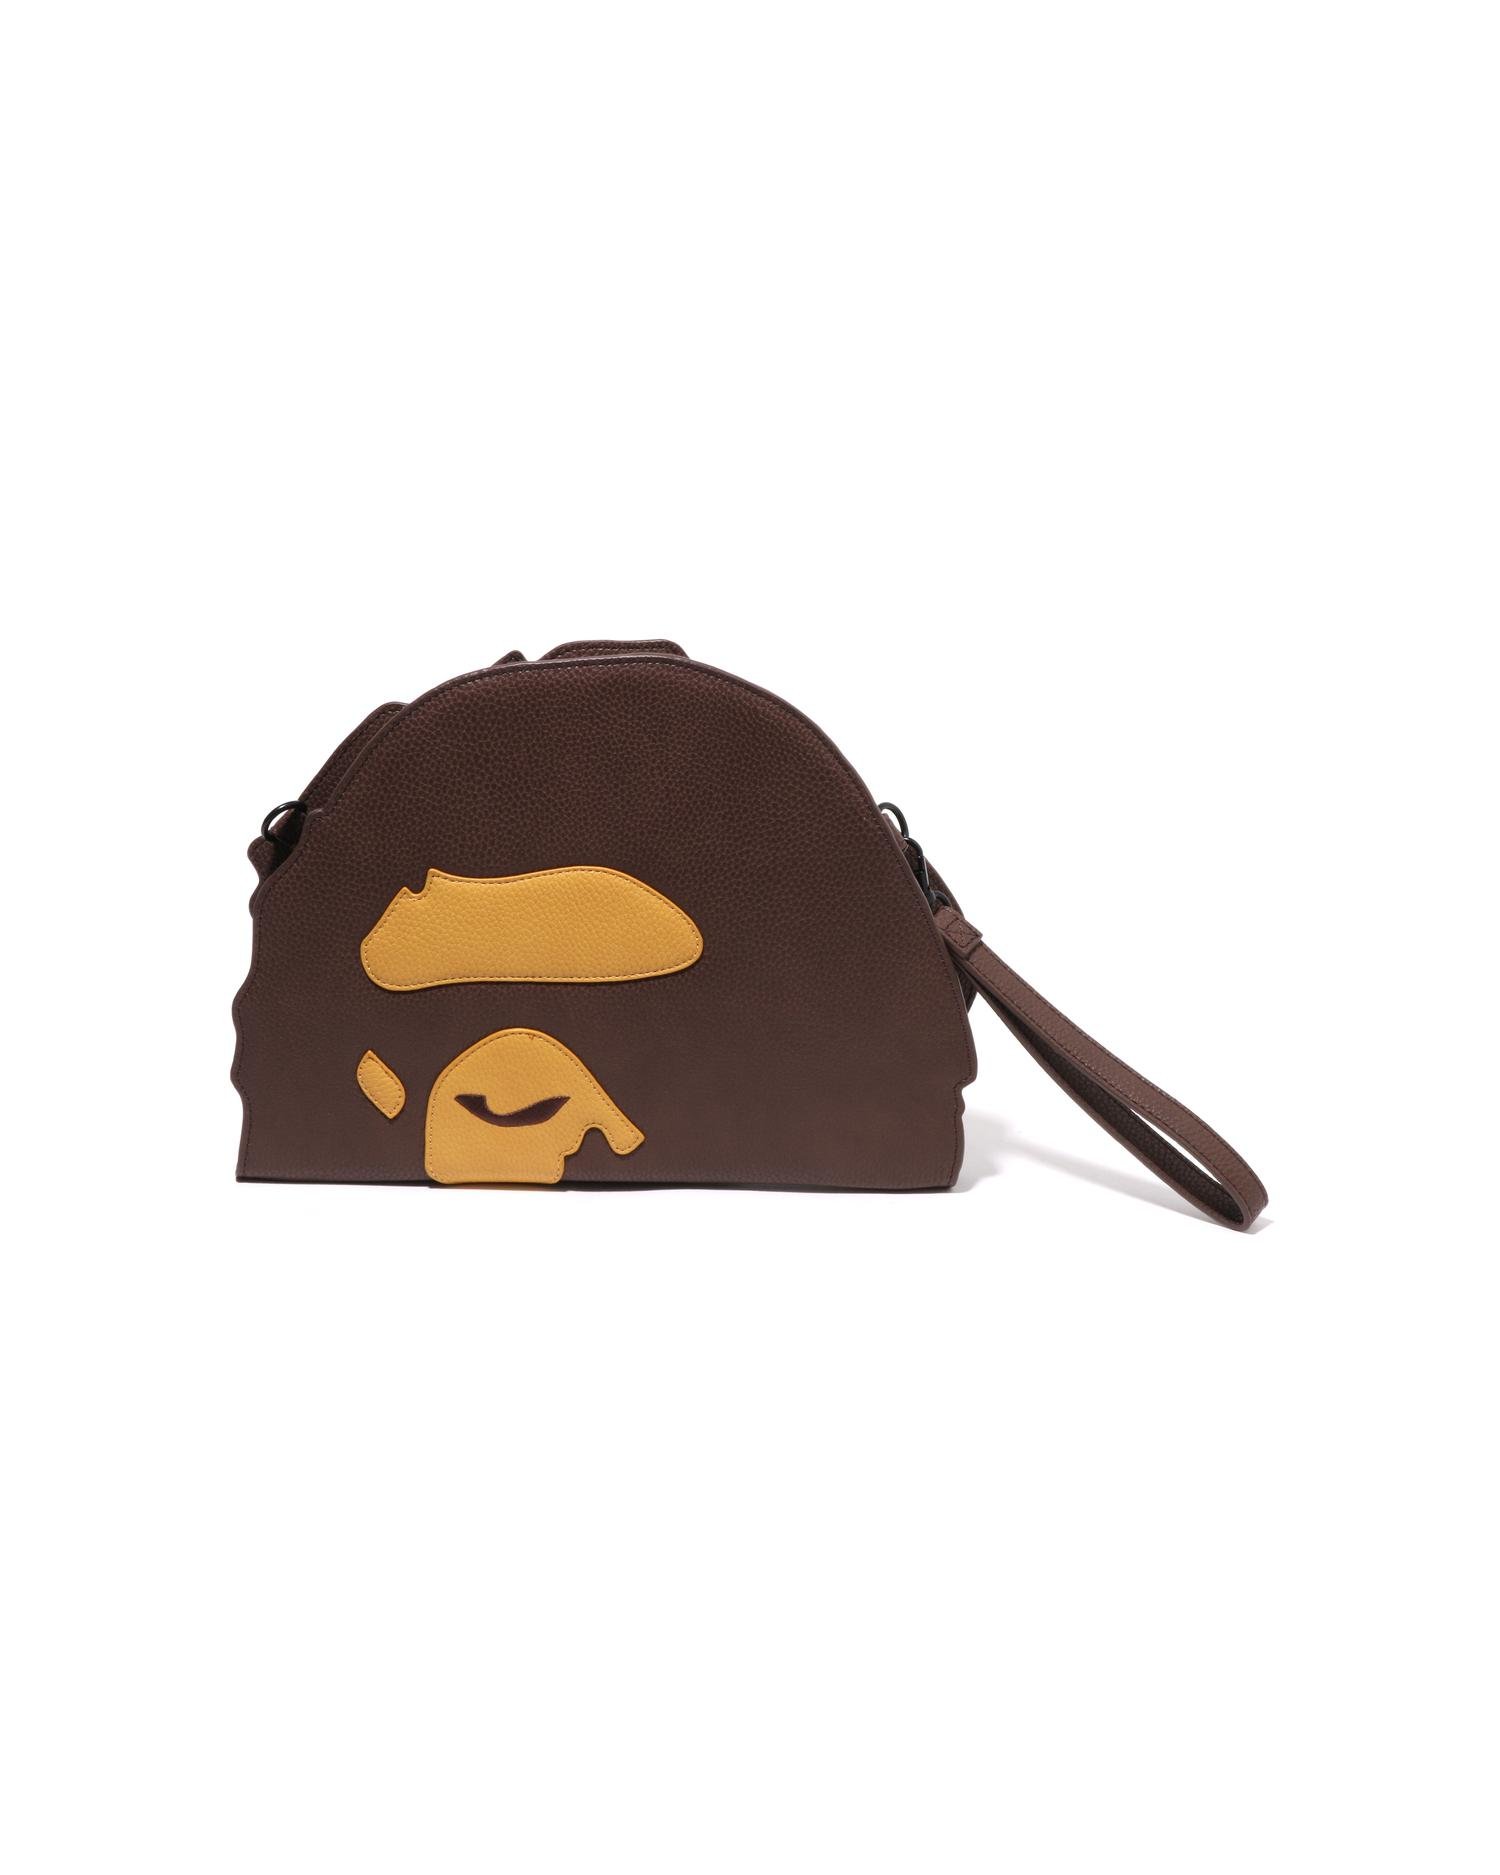 Ape Head Pouch by BAPE